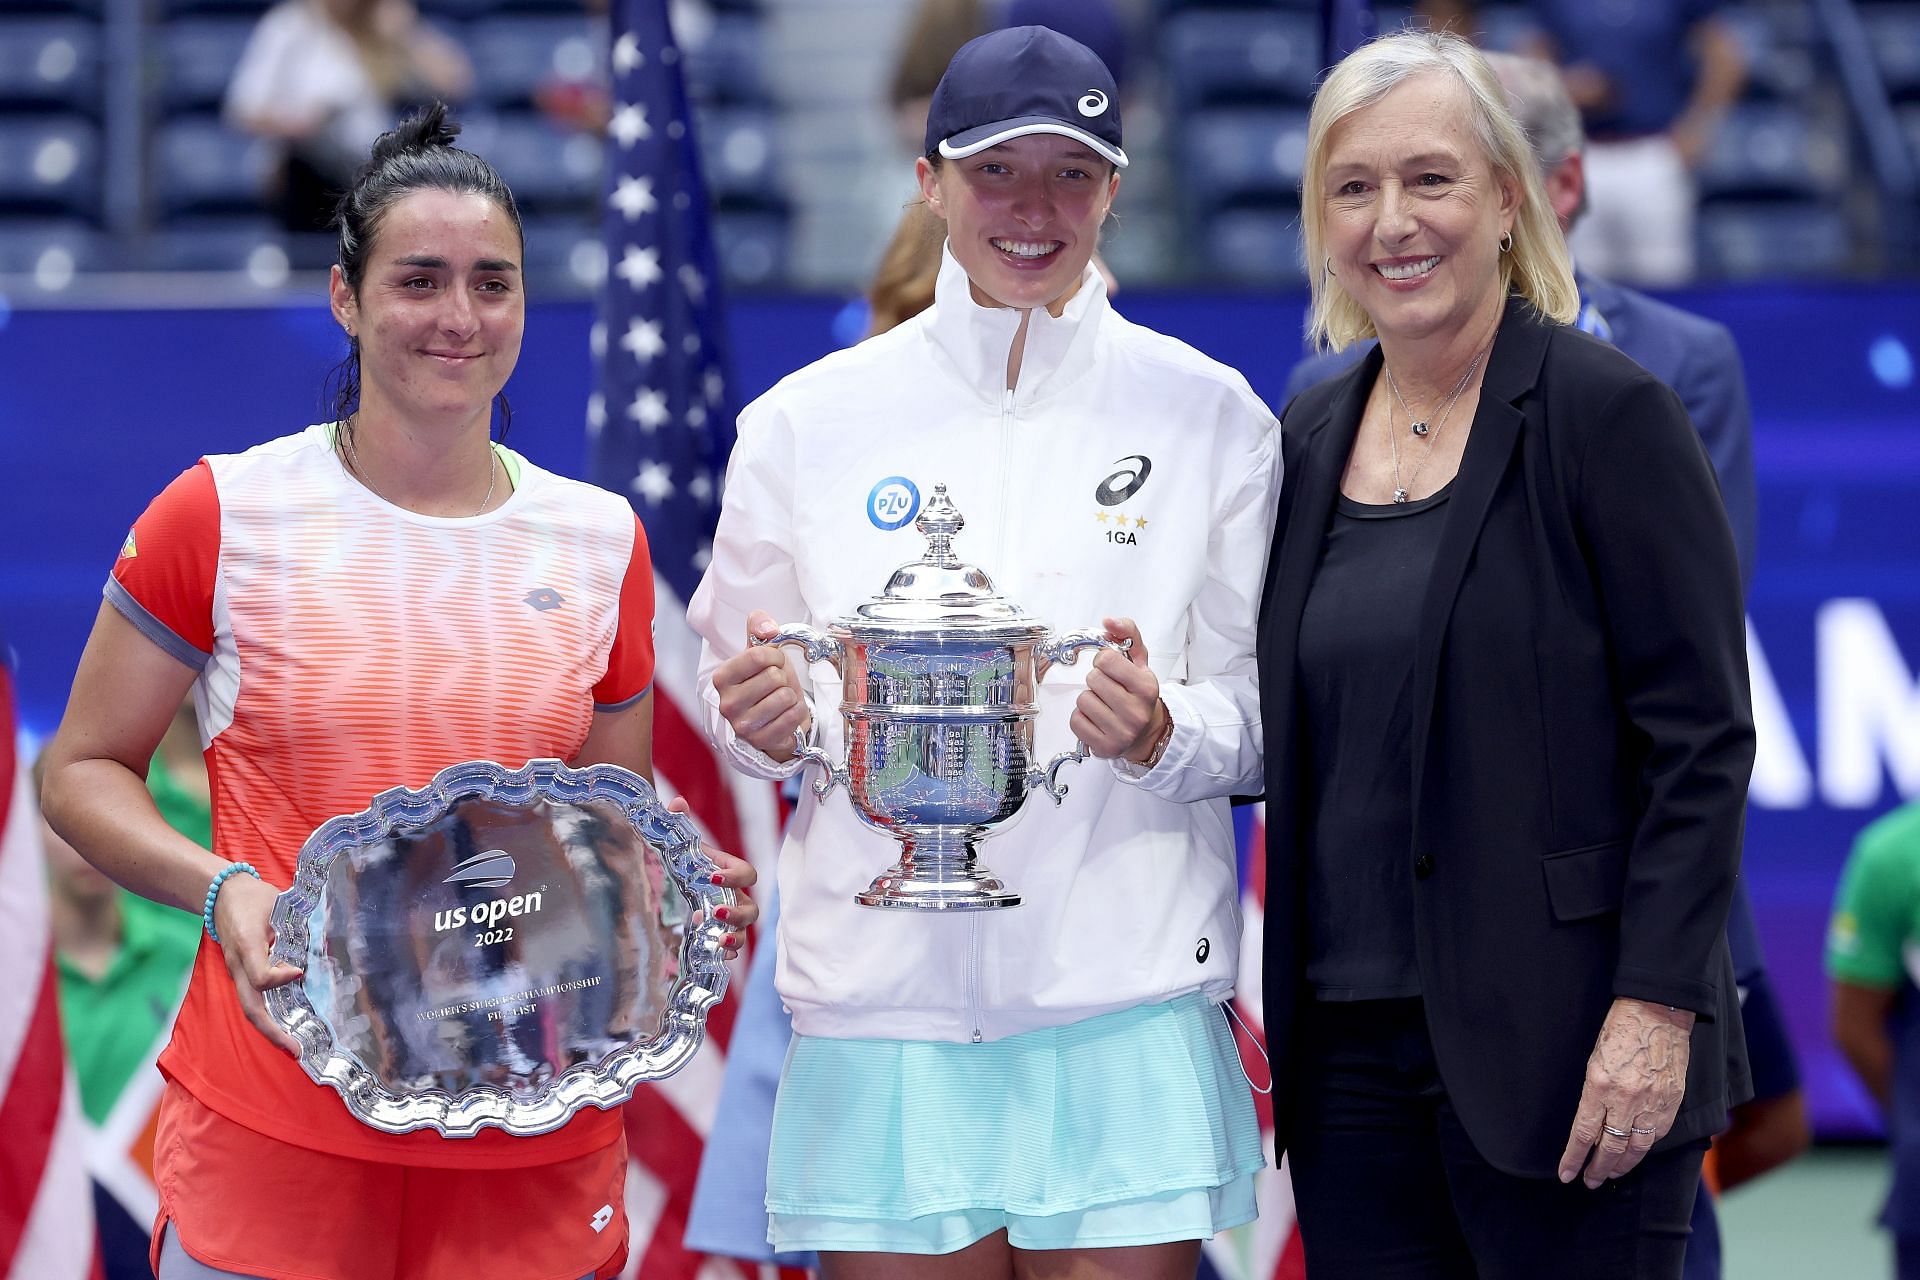 Ons Jabeur, Iga Swiatek and Martina Navratilova at the 2022 US Open.